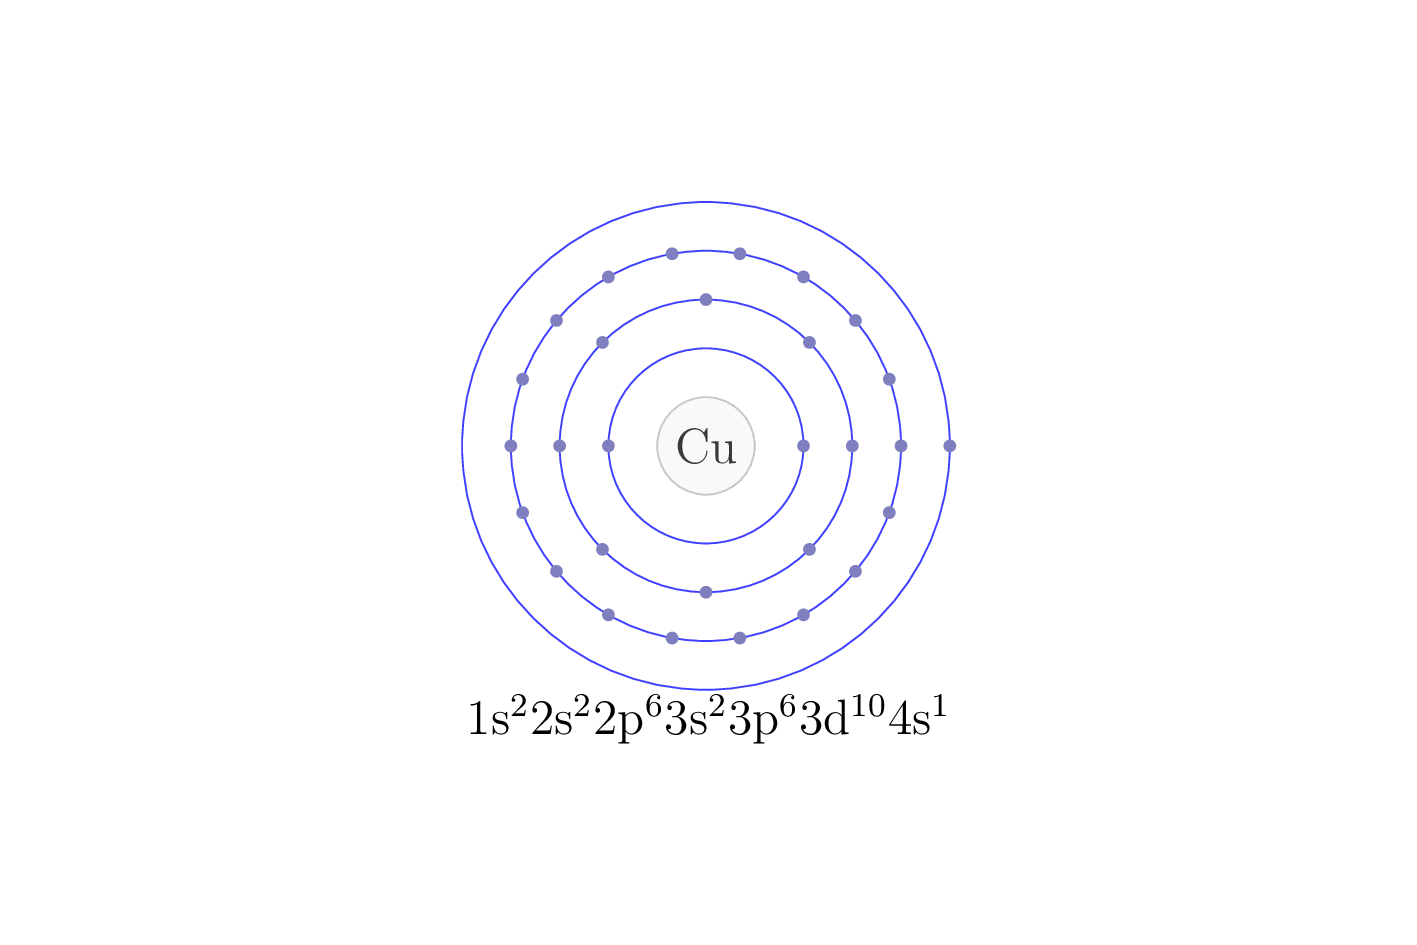 electron configuration of element Cu